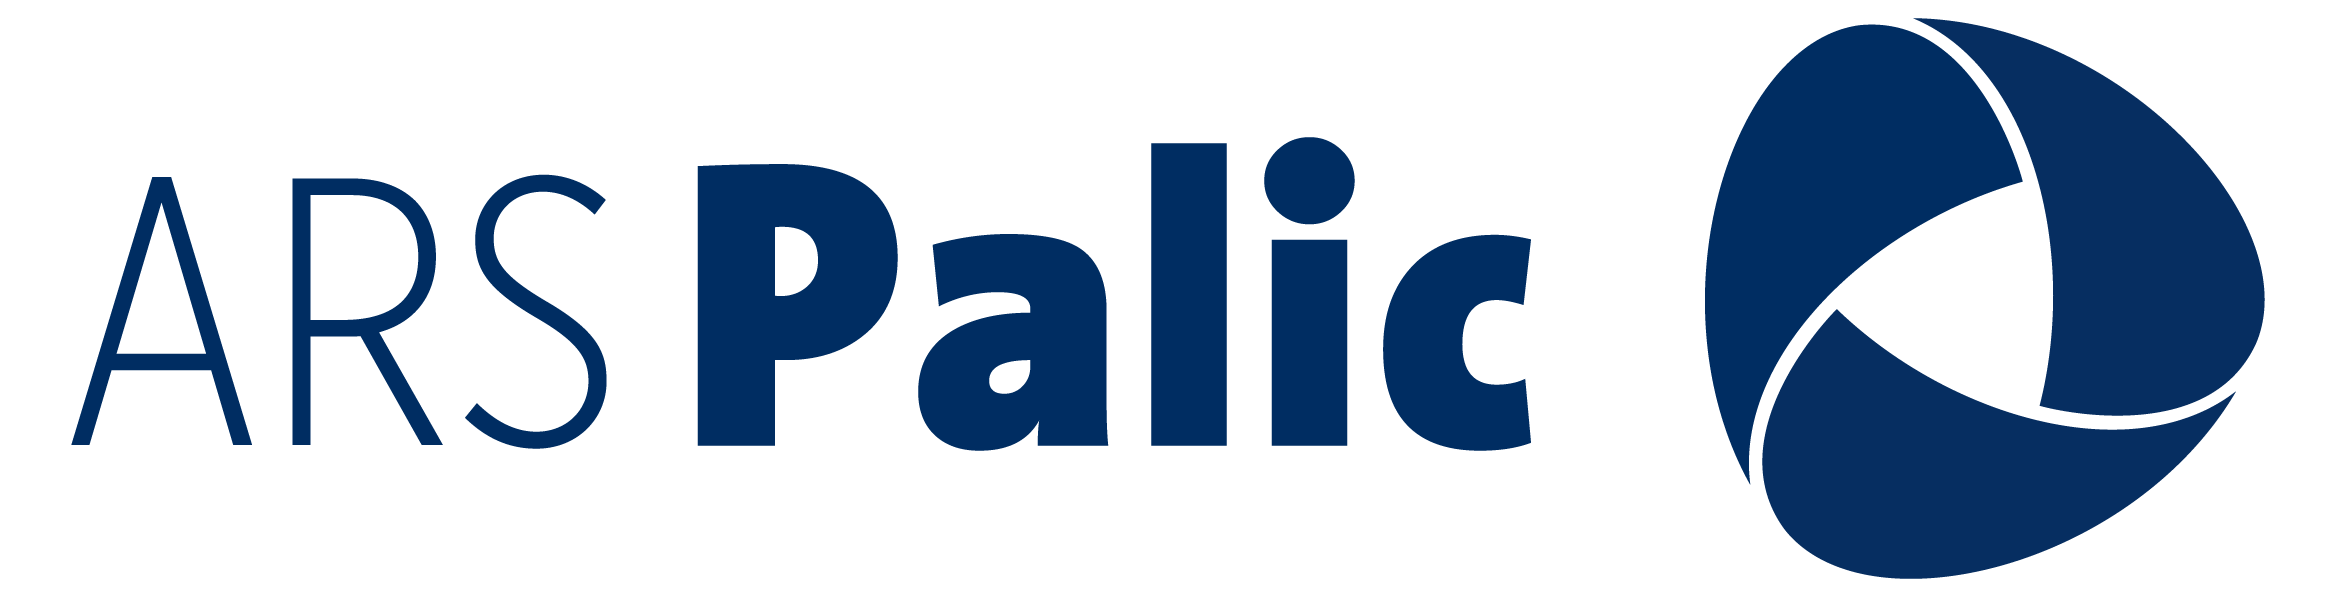 Palic-ARS.png